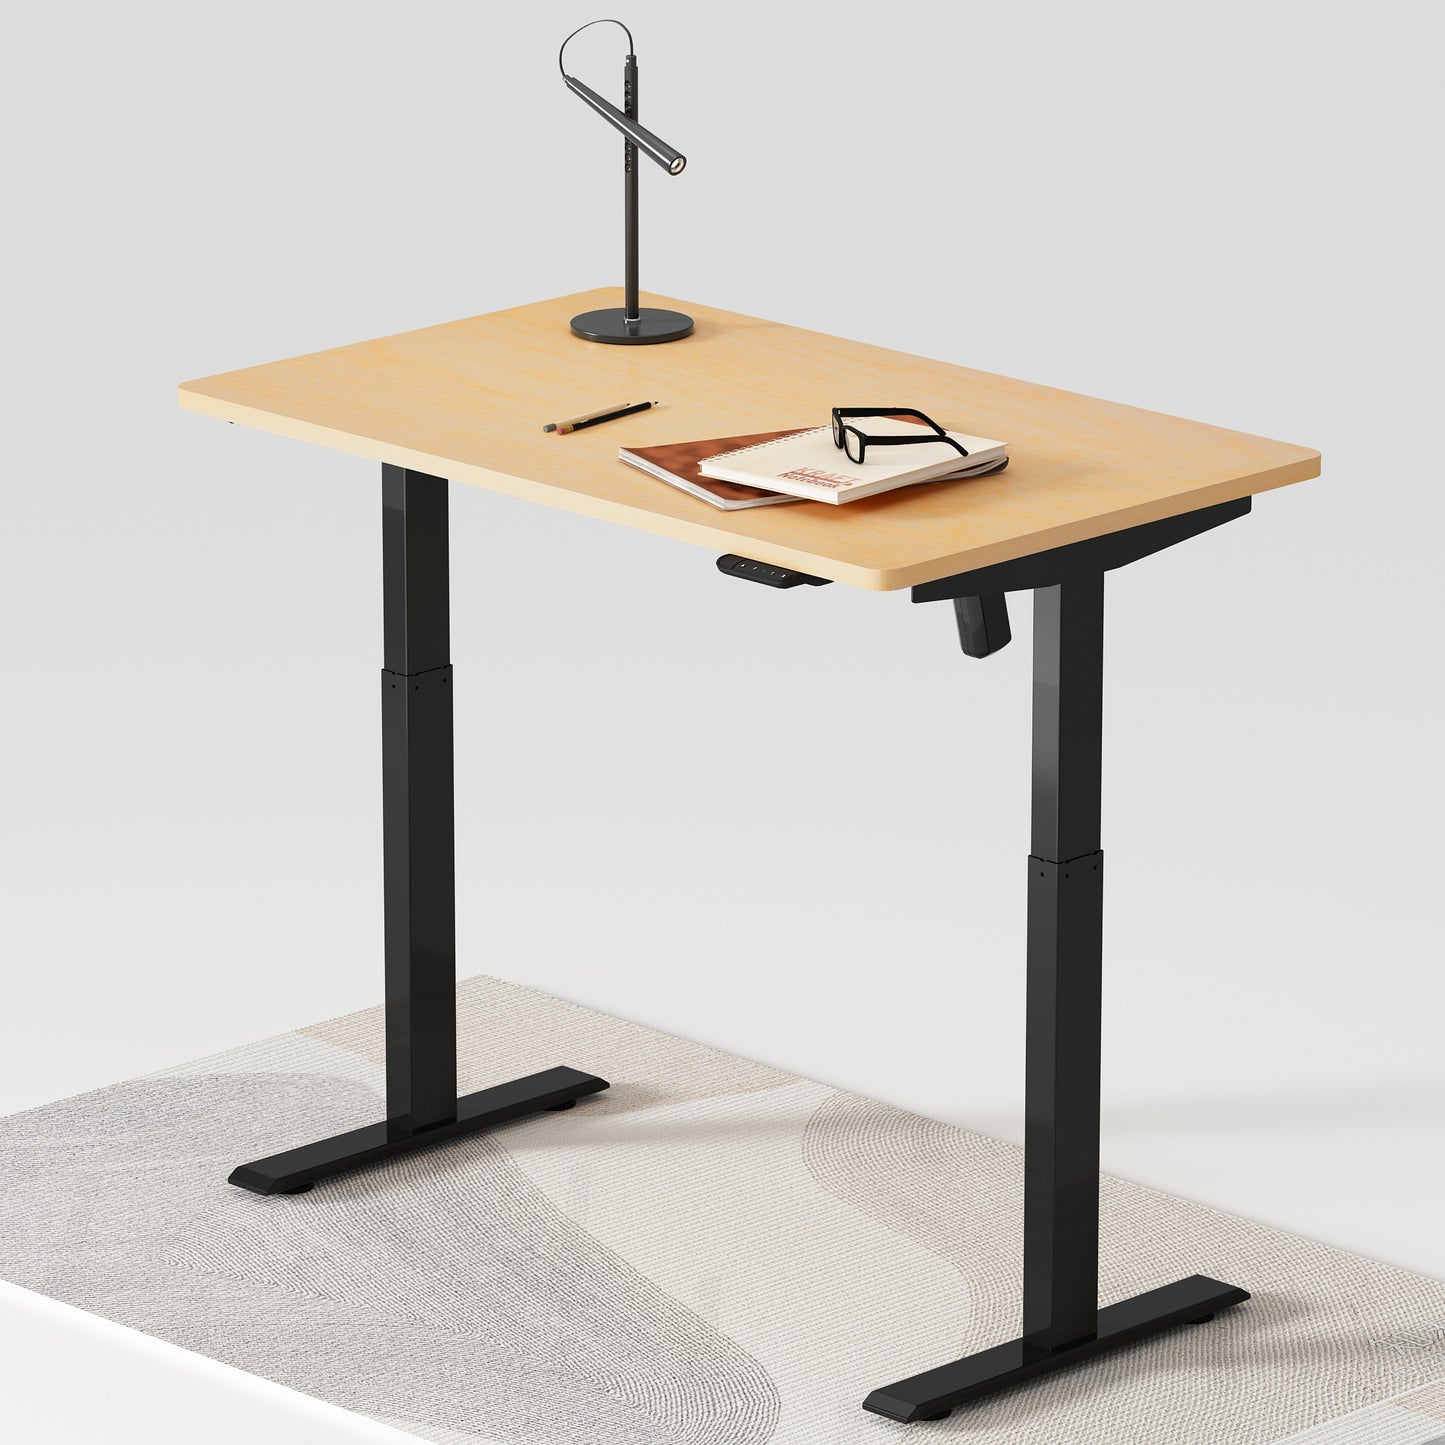 Single Motor Standing Desk | ALFA SOLE Desk - Standing Desk Single Motor 48 x 30"